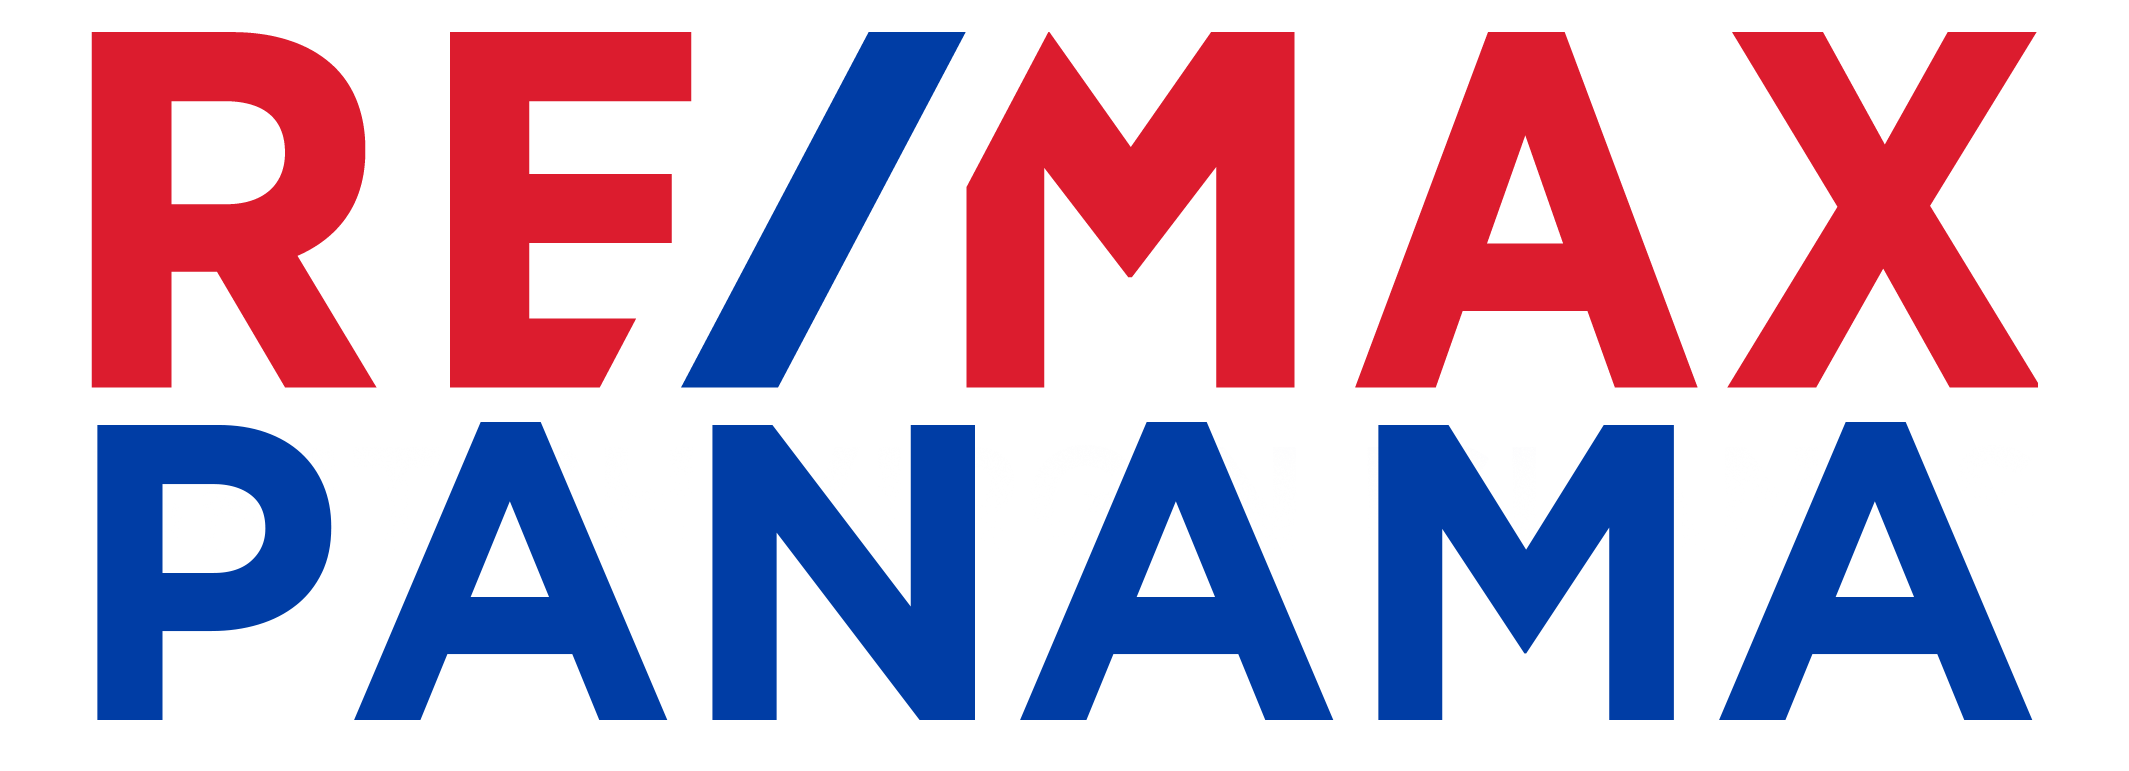 RE/MAX's Logo'